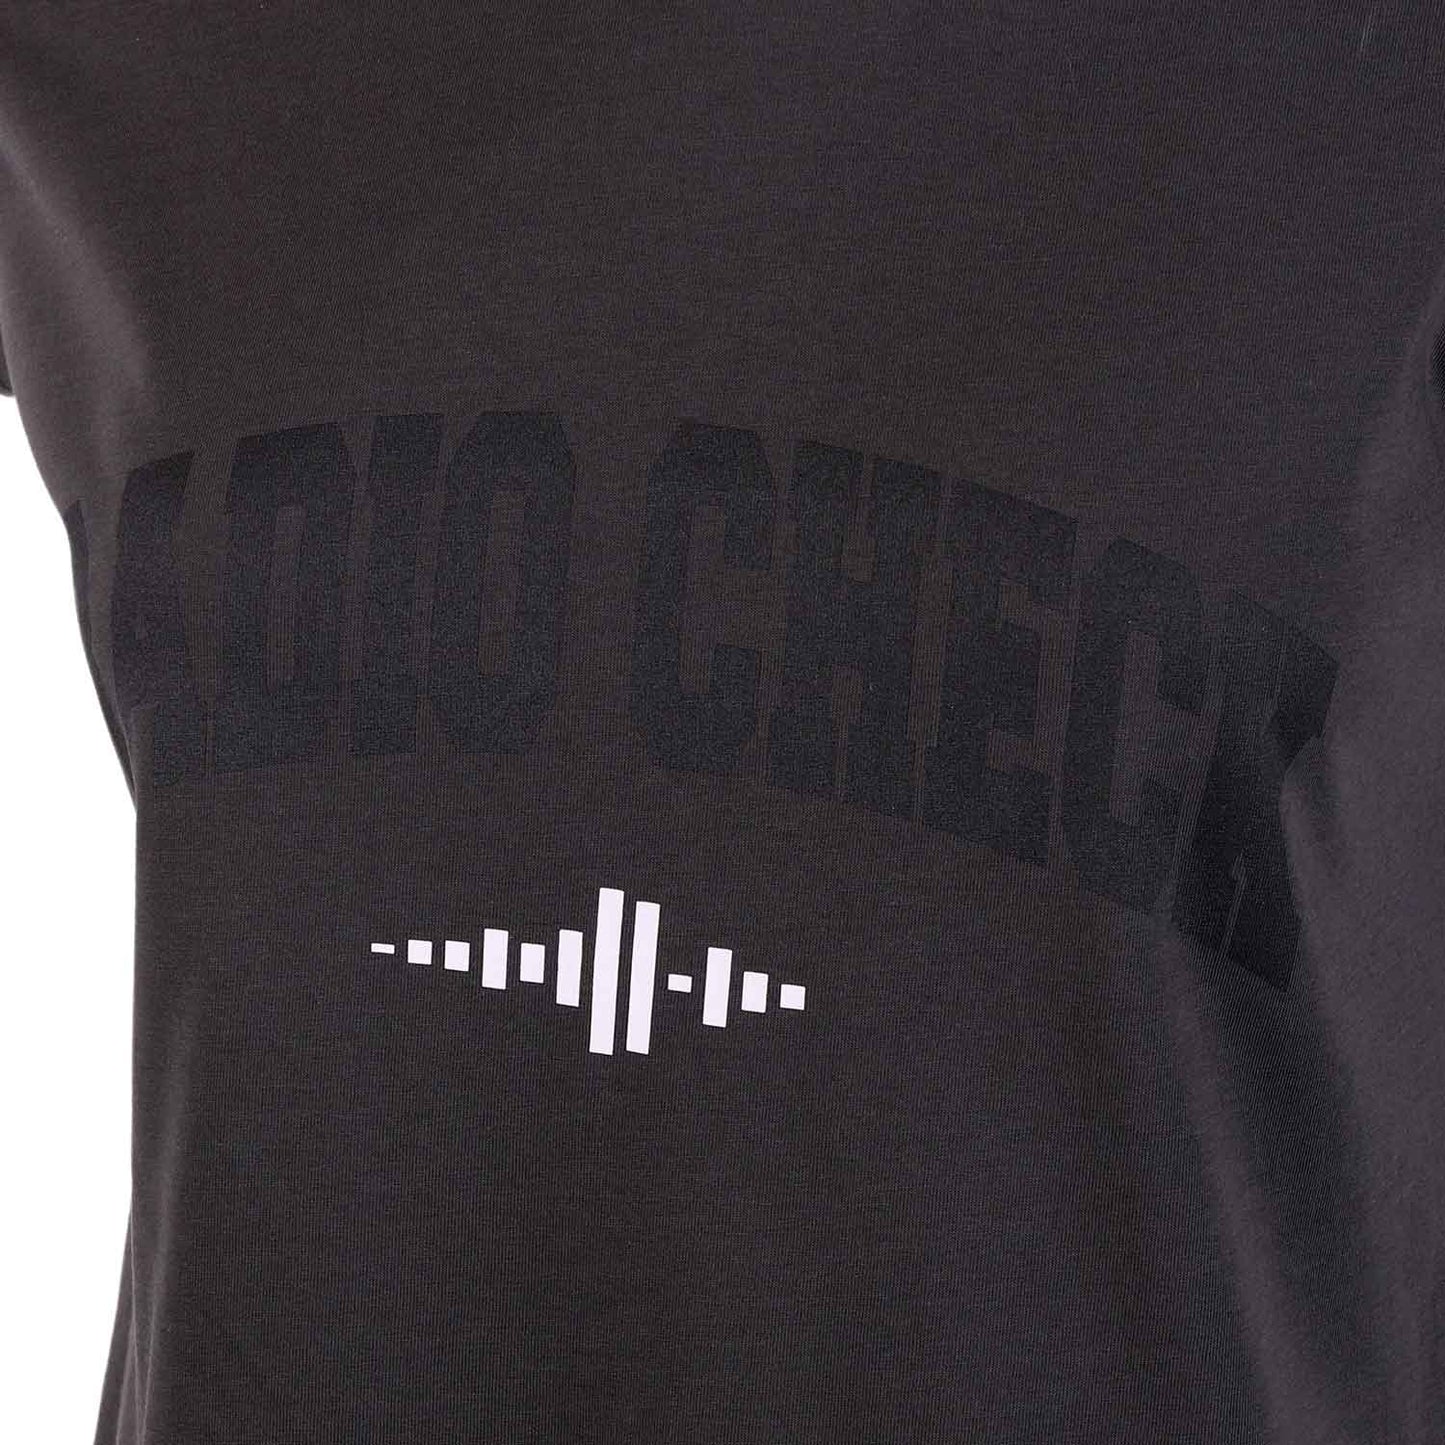 Dames T-shirt ‘Radio Check’